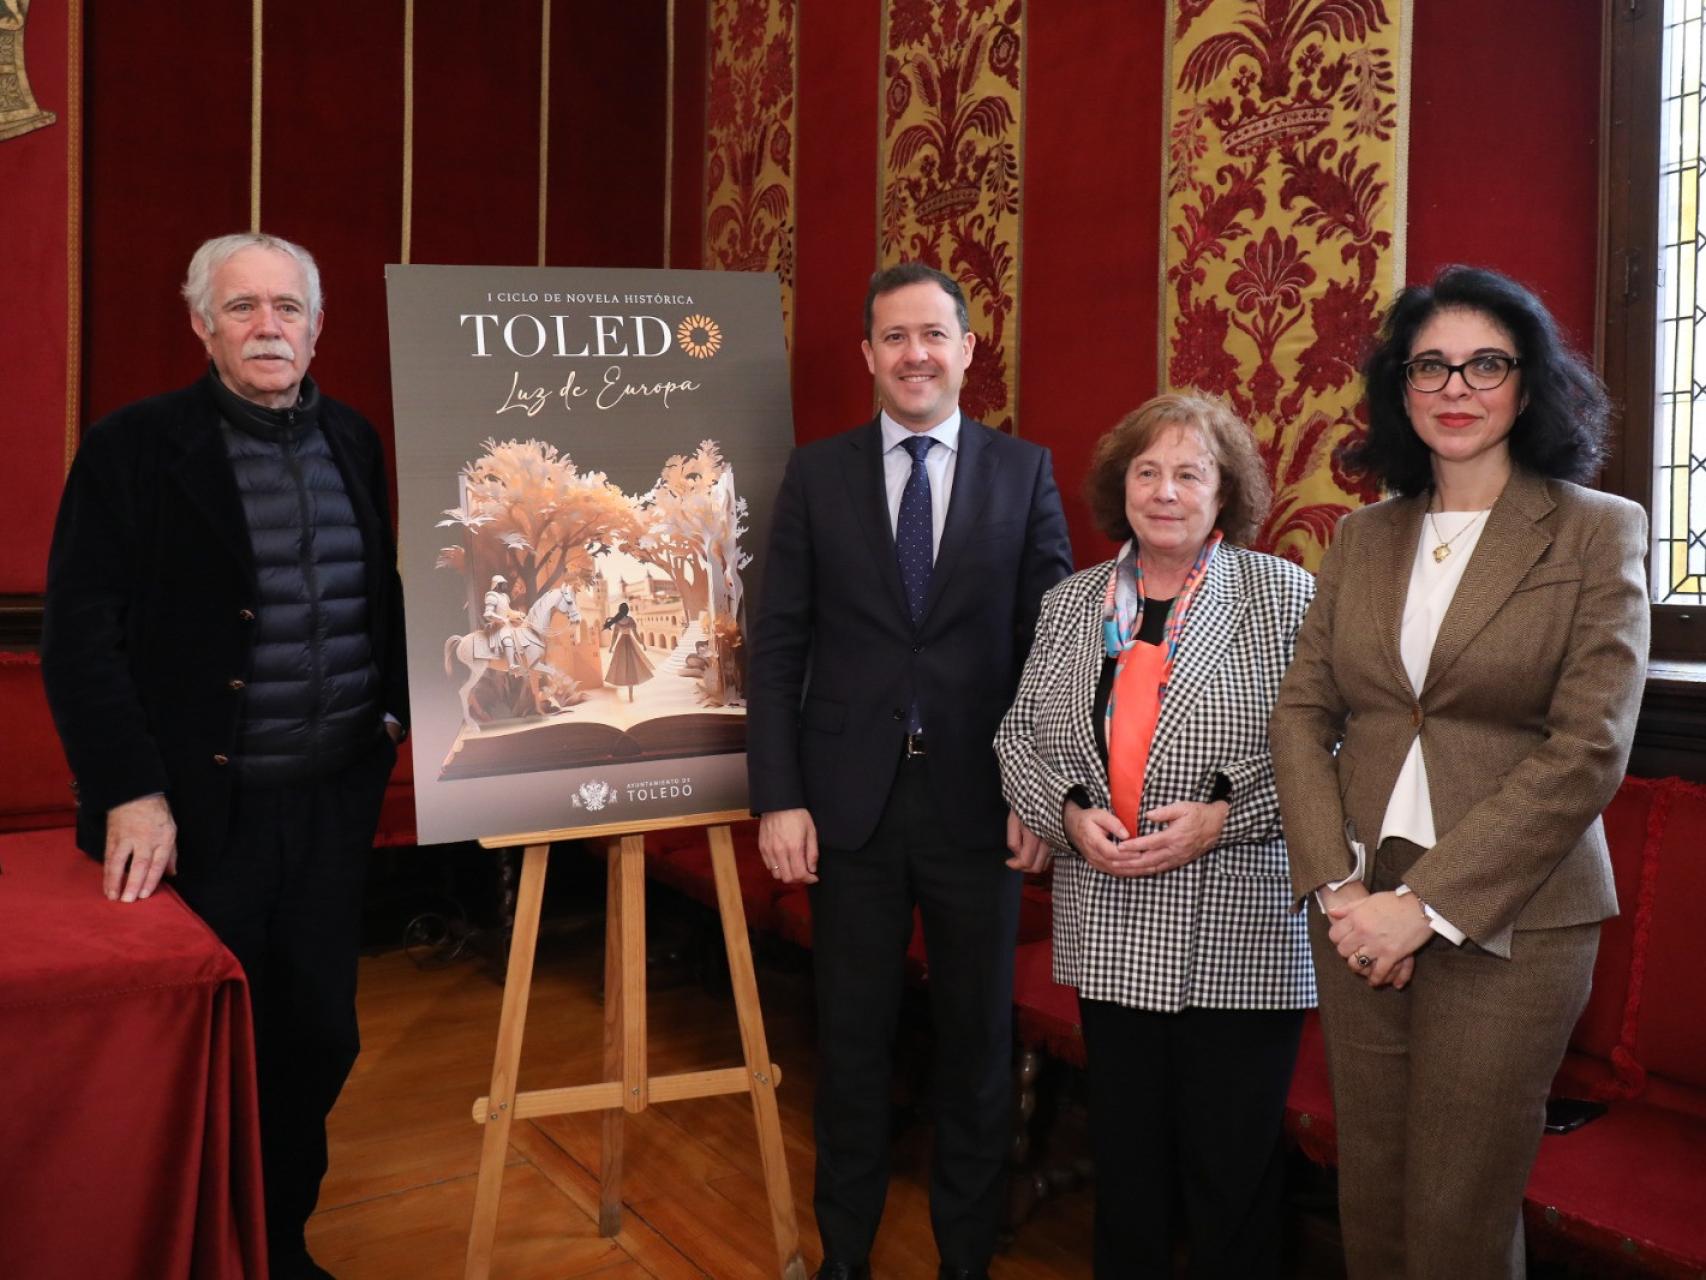 I Ciclo de novela histórica Toledo luz de Europa